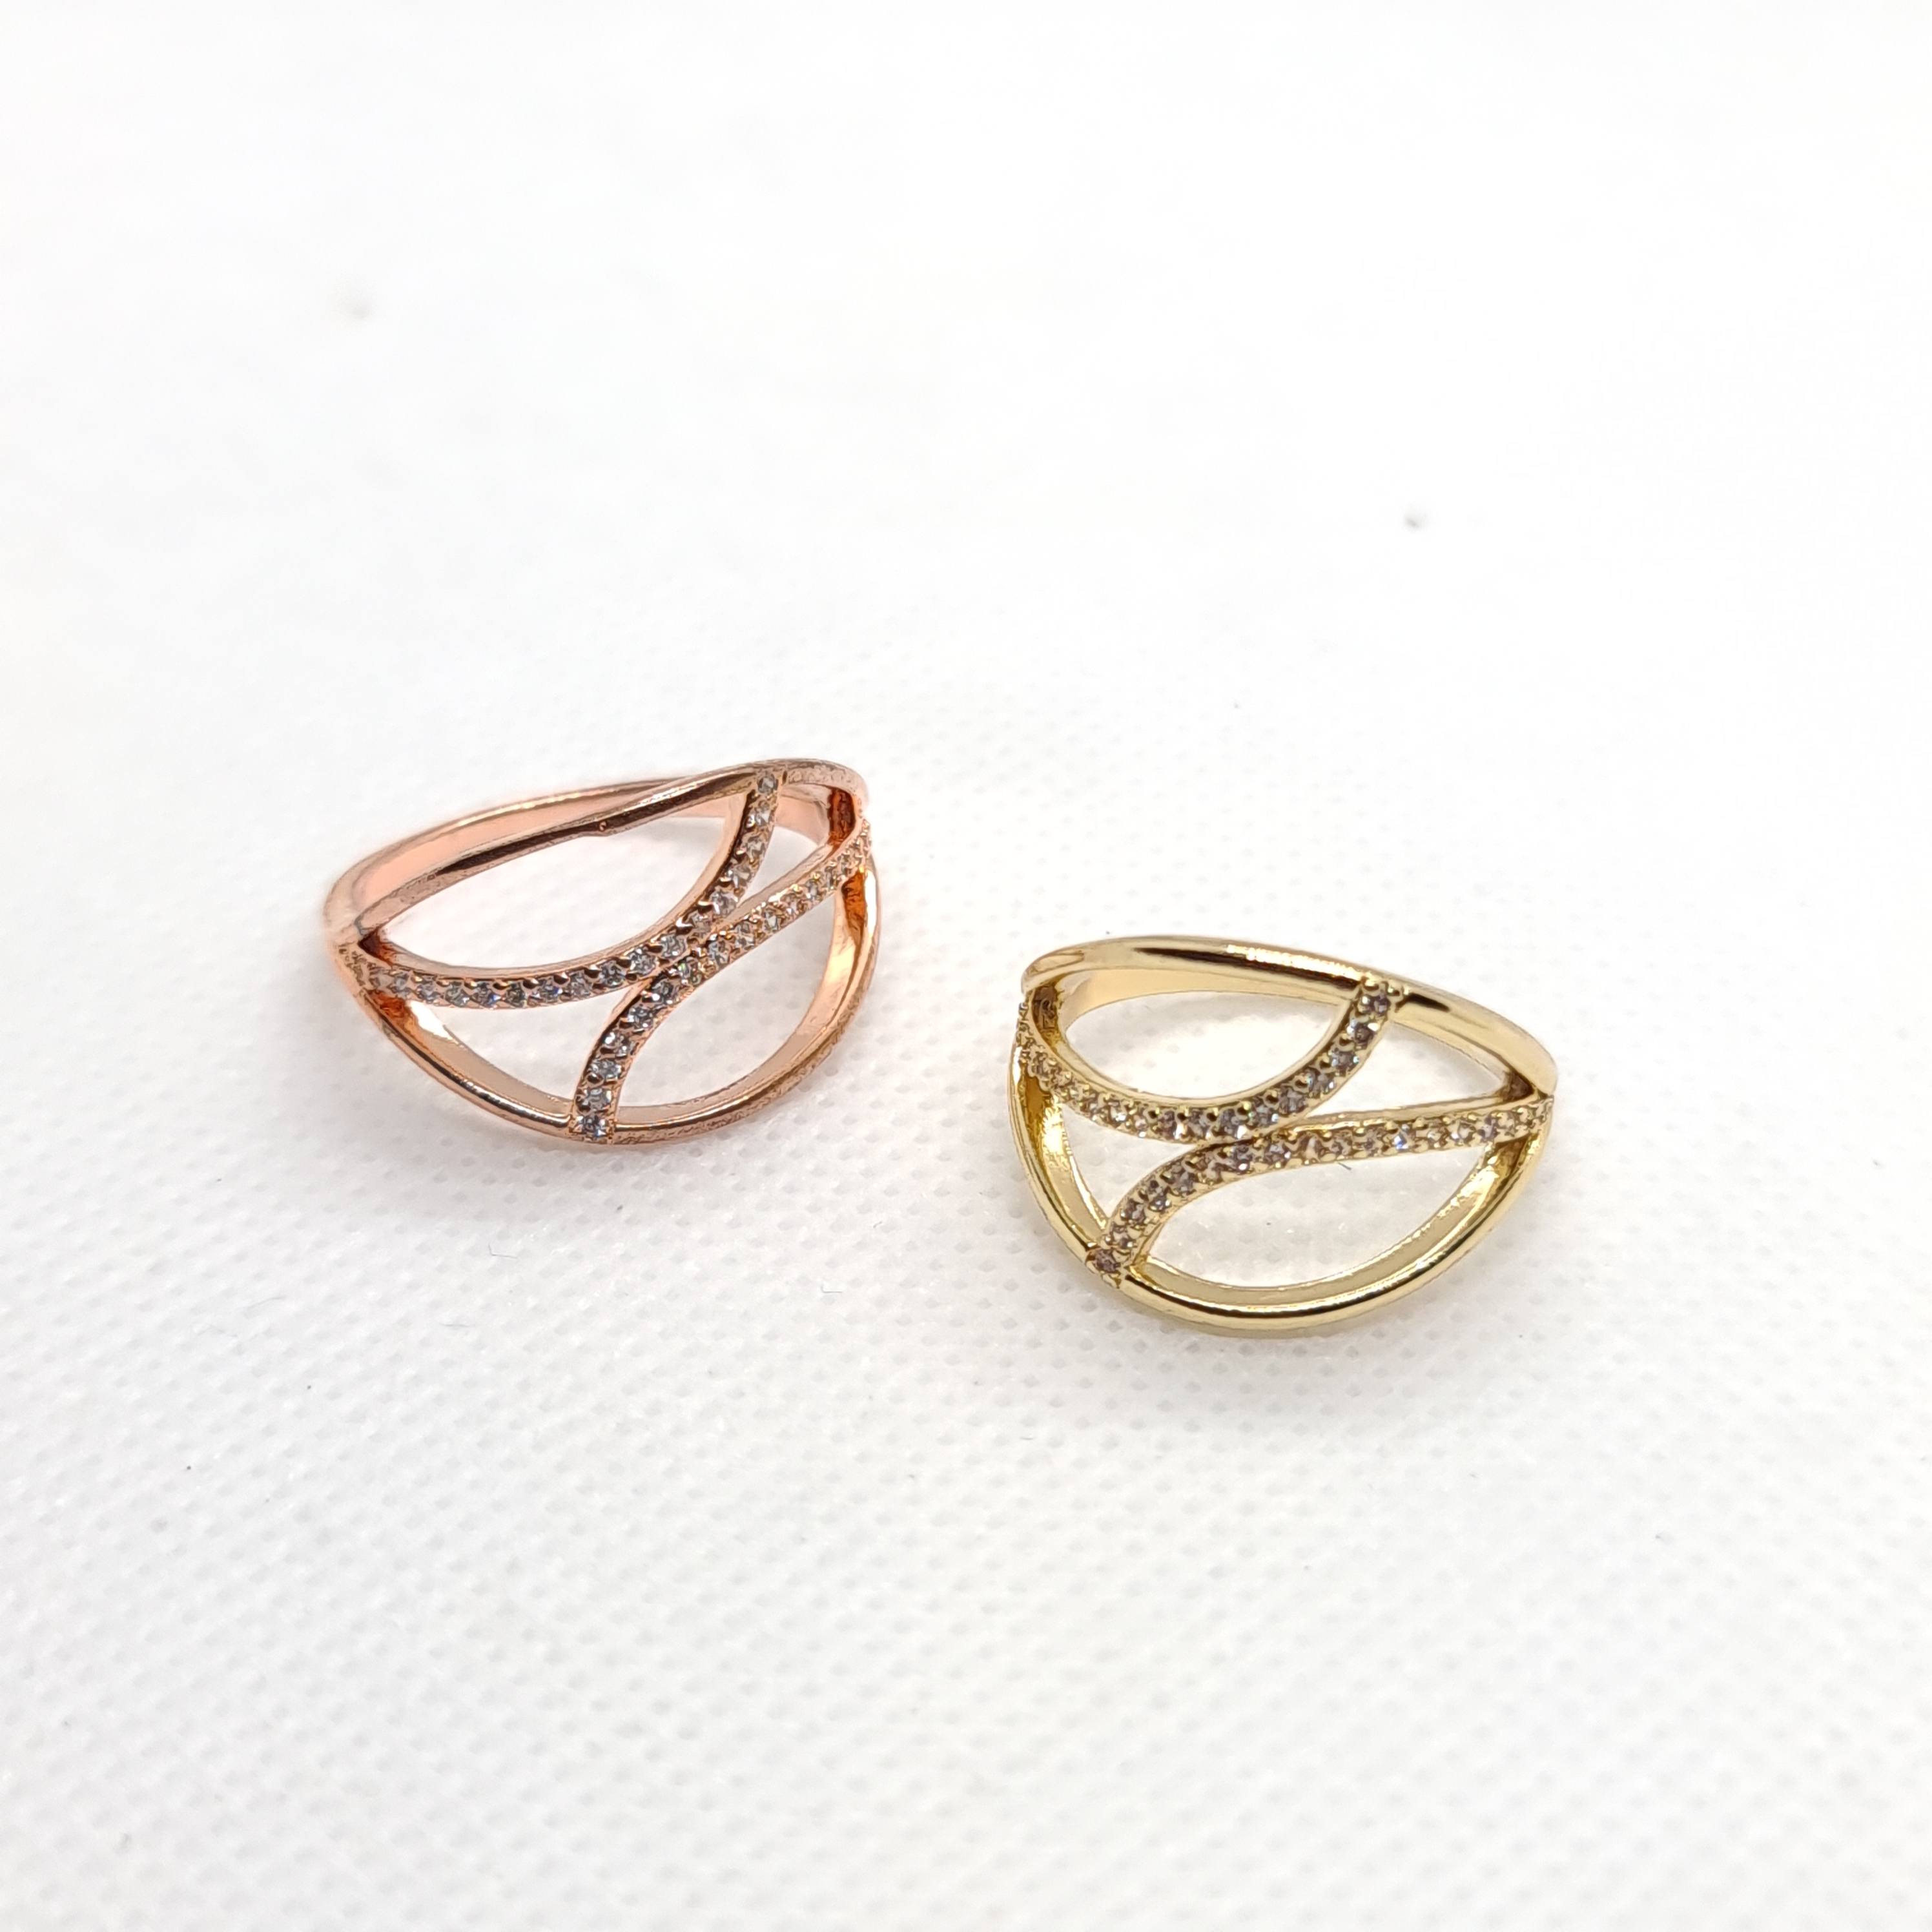 Diaognal; Rings - Maha fashions -  Rings